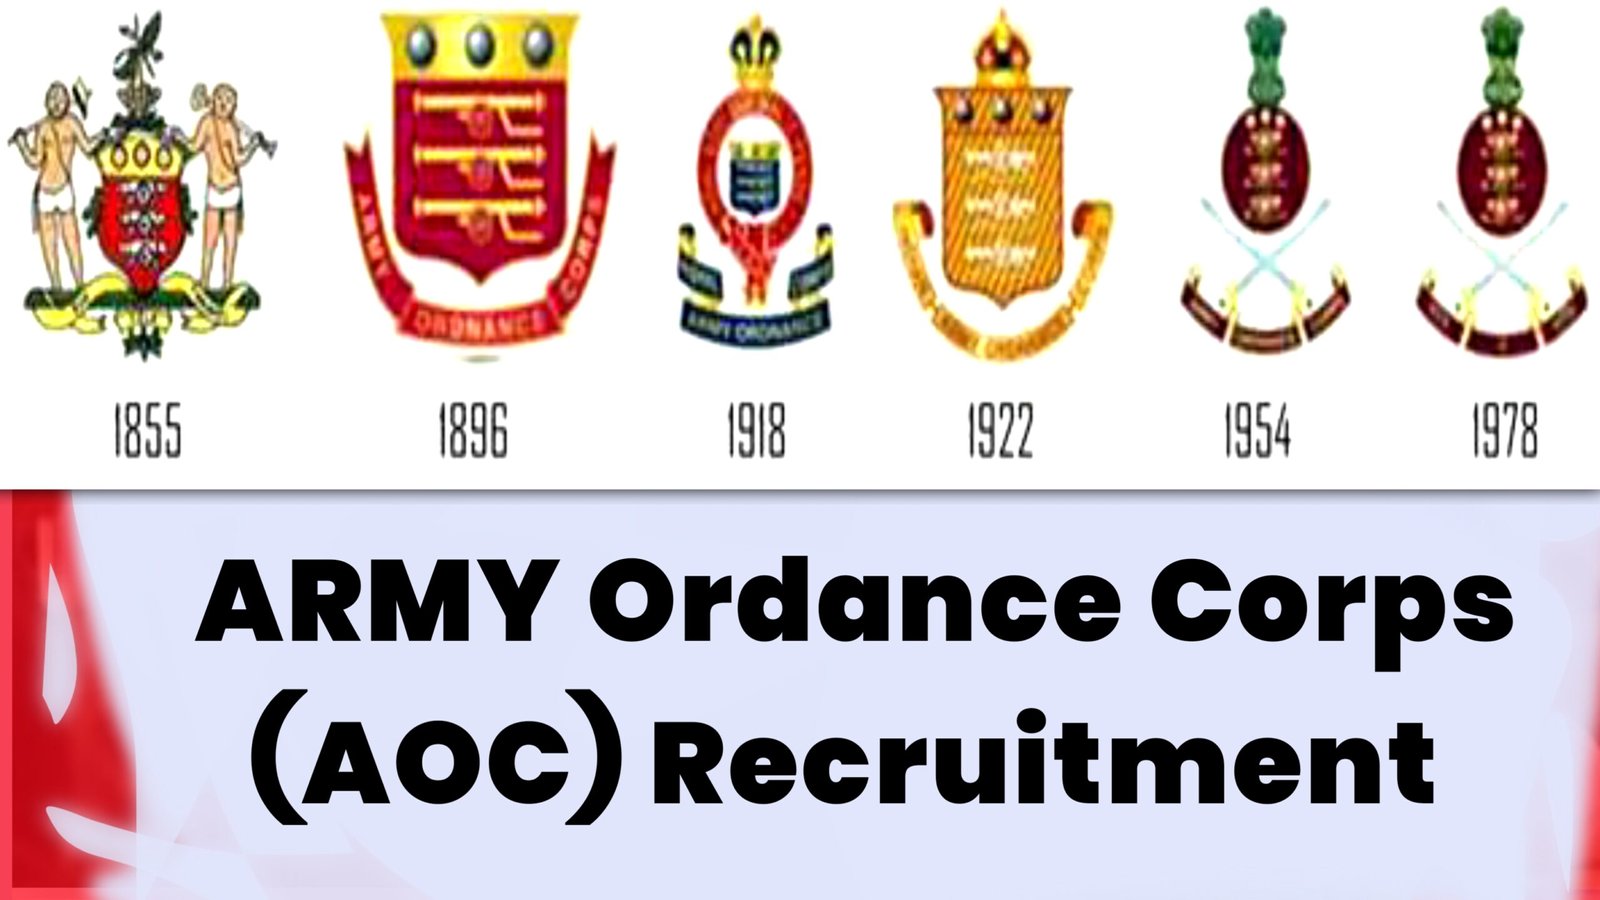 Army Ordnance Corps AOC Recruitment Notification